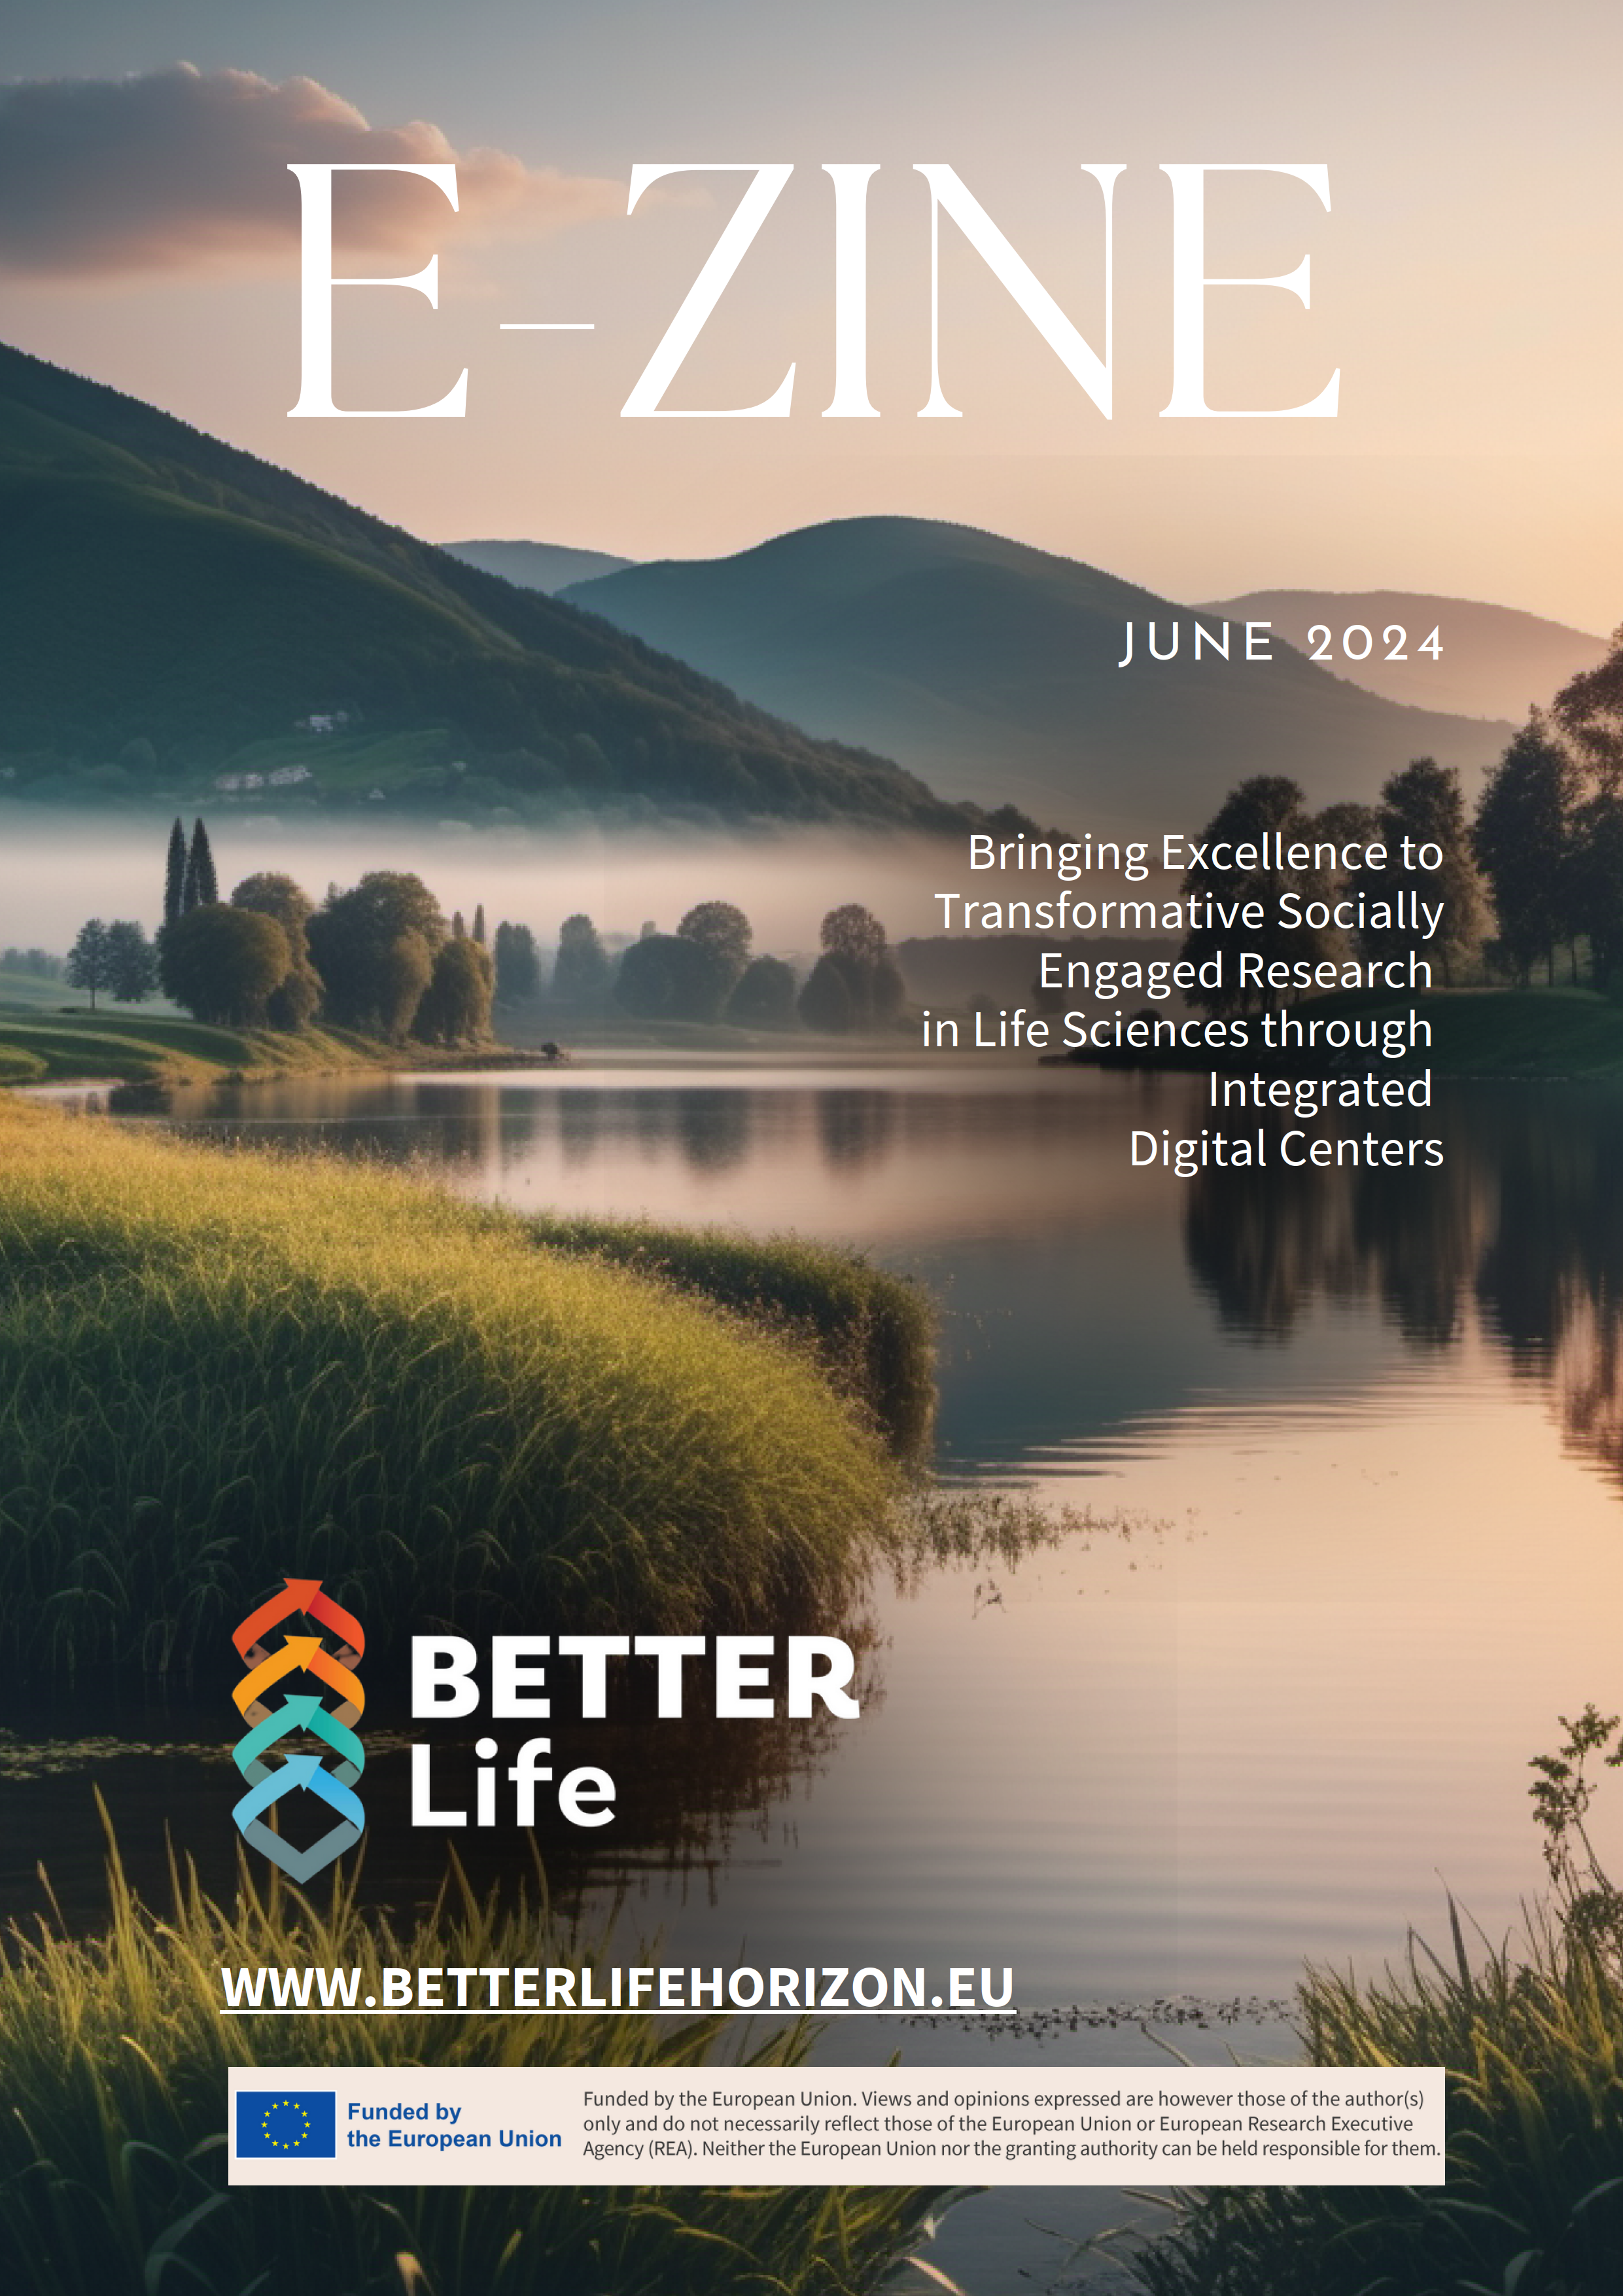 Presenting the BETTER Life E-Zine: June 2024